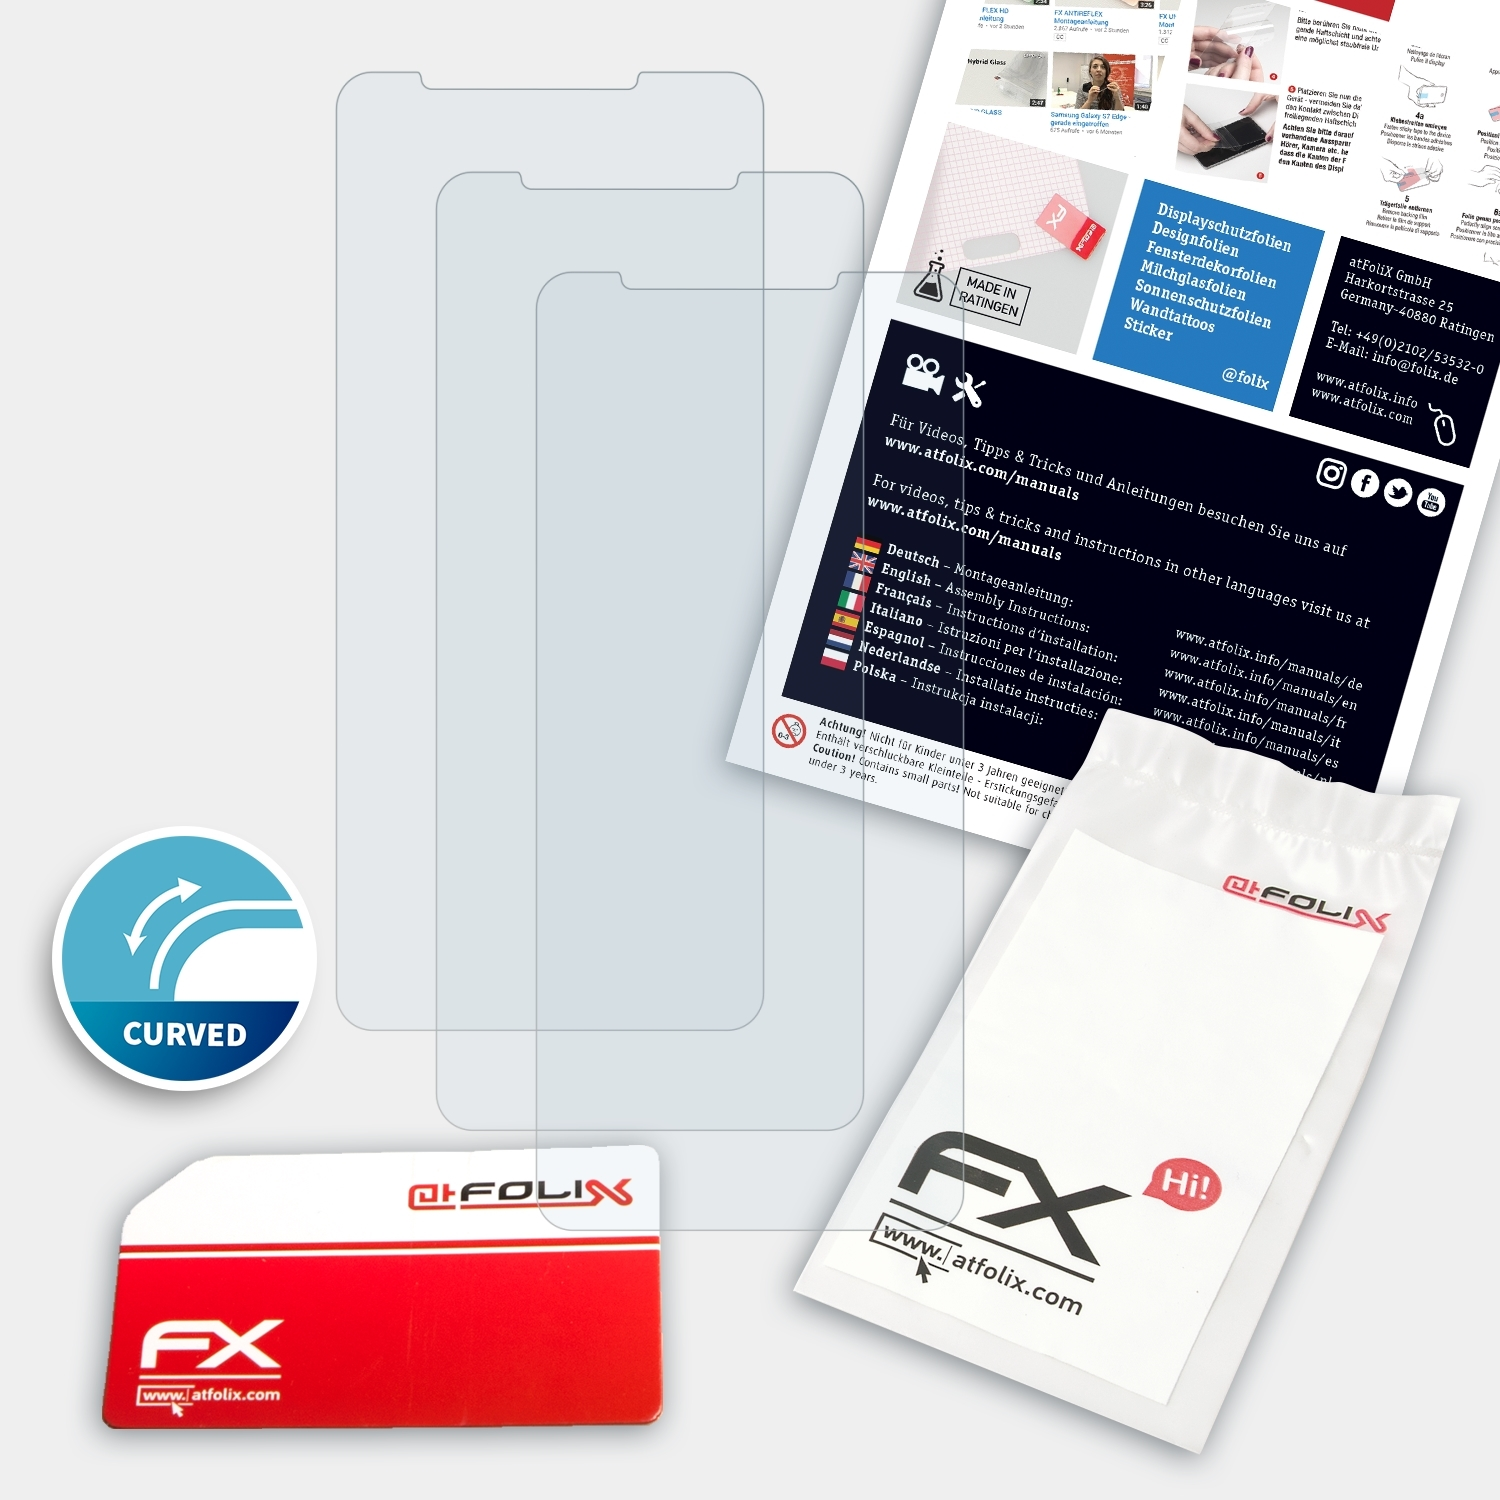 3x FX-ActiFleX X) Tecno Camon Displayschutz(für ATFOLIX